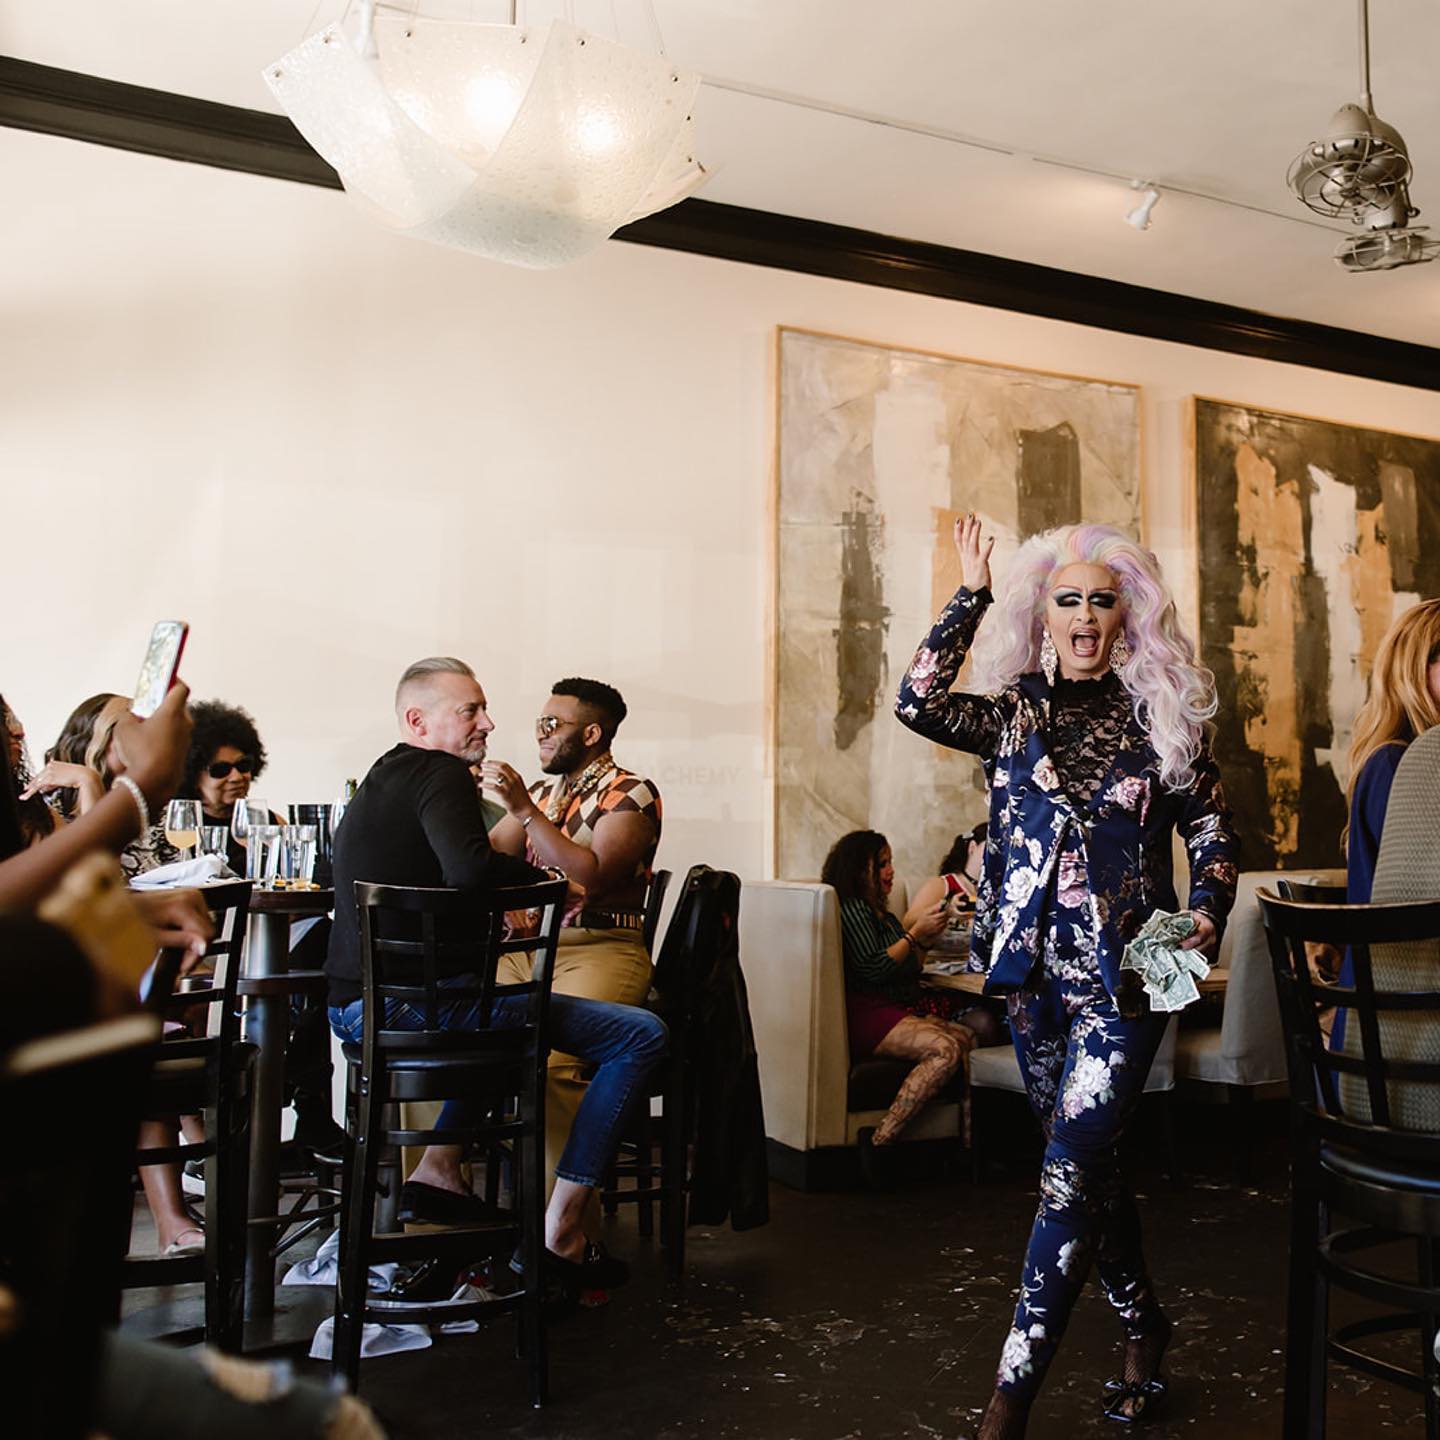 A drag queen performing at a restaurant